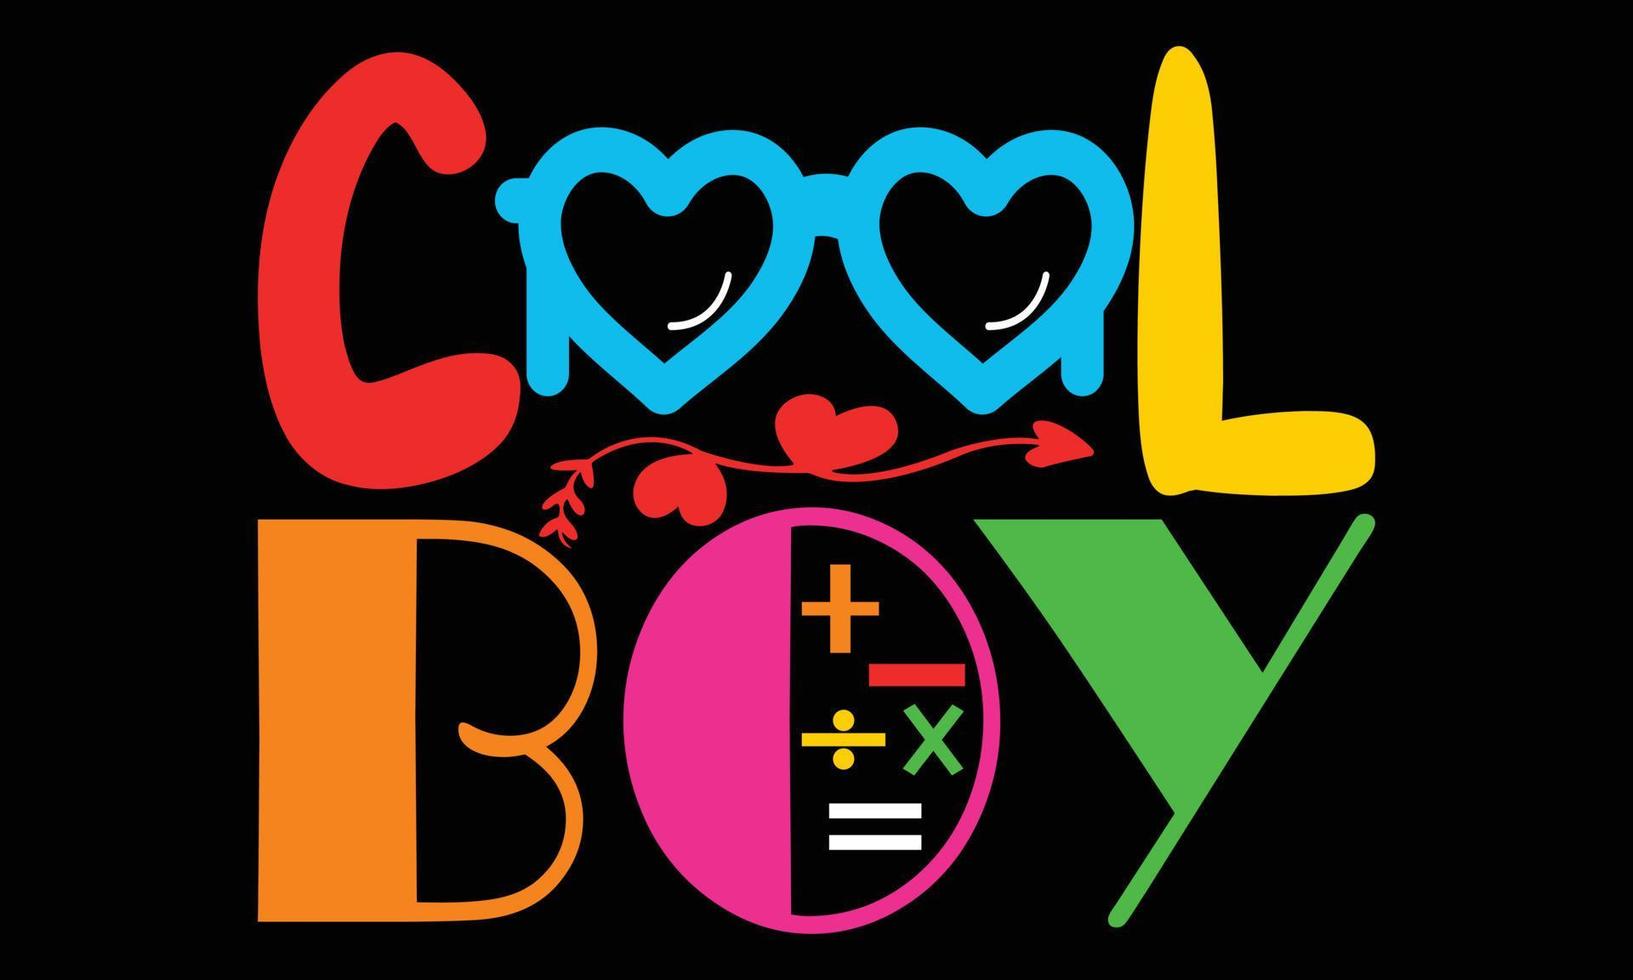 Cool Boy, Bad Boy, One Cool Boy, Kids T-shirts Design. vector